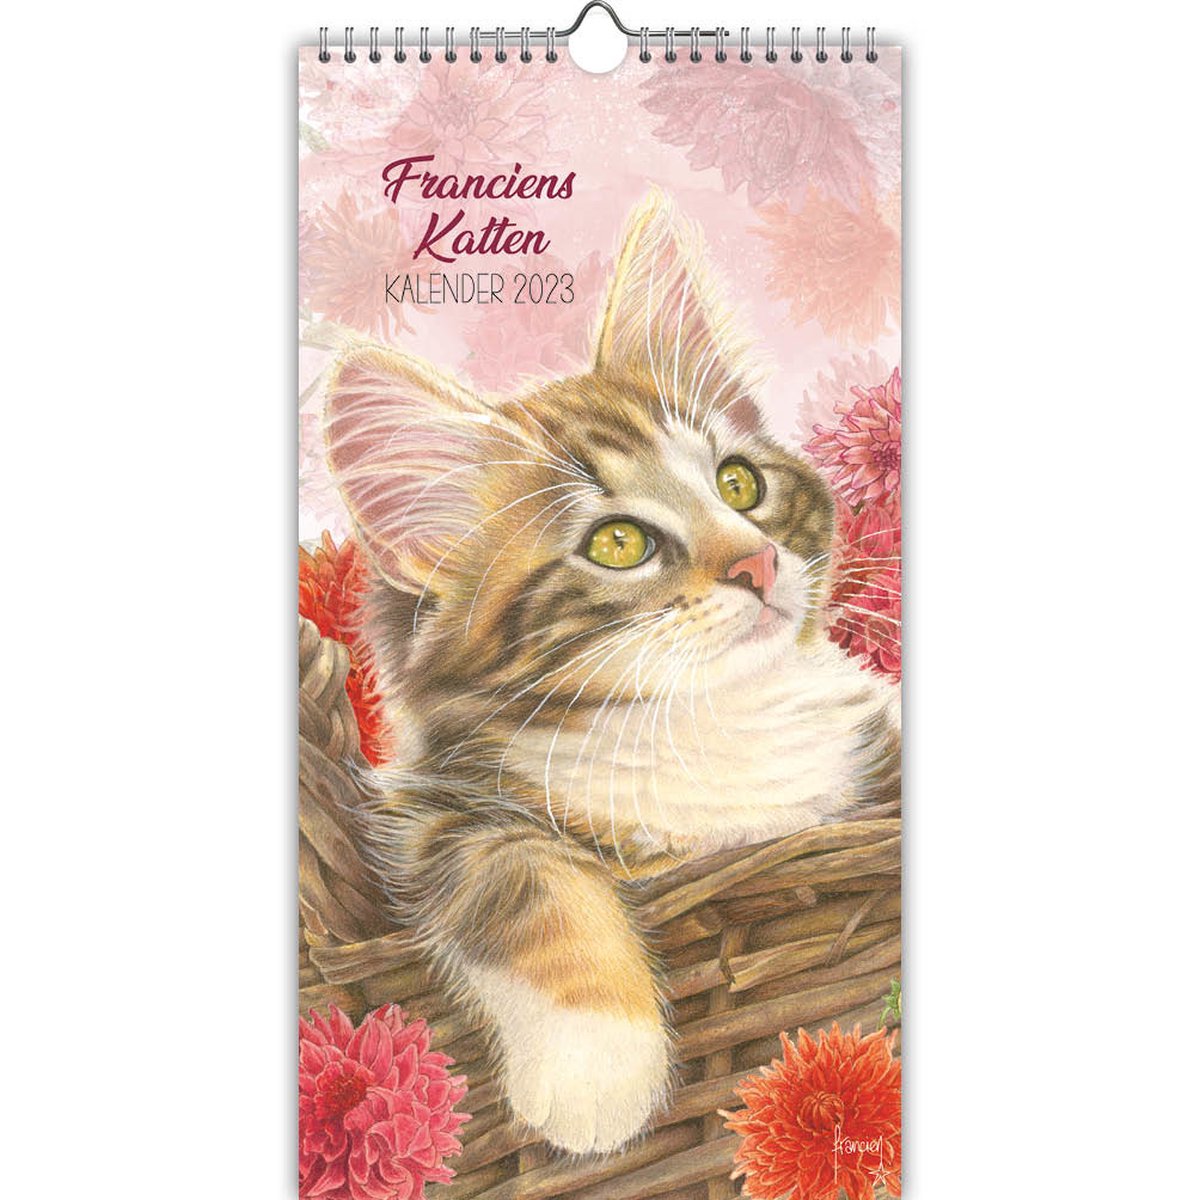 Franciens katten maandkalender 2023 - Francy - 18x34,5 cm